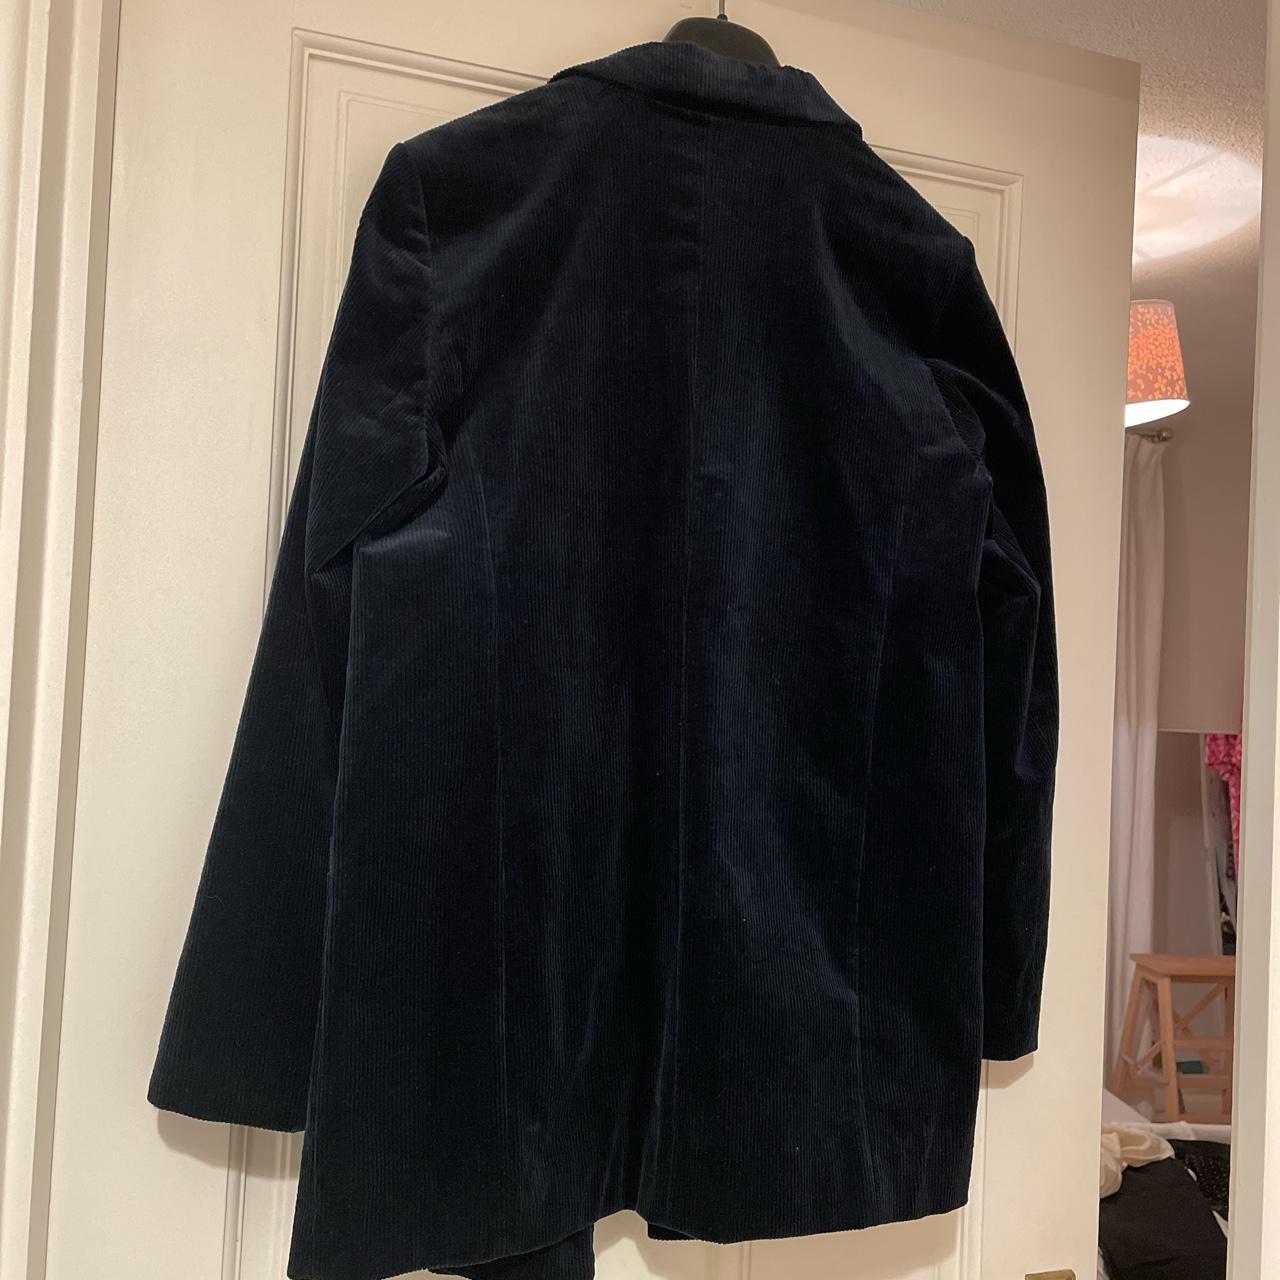 Ganni navy blue corduroy blazer jacket size 36 (UK... - Depop